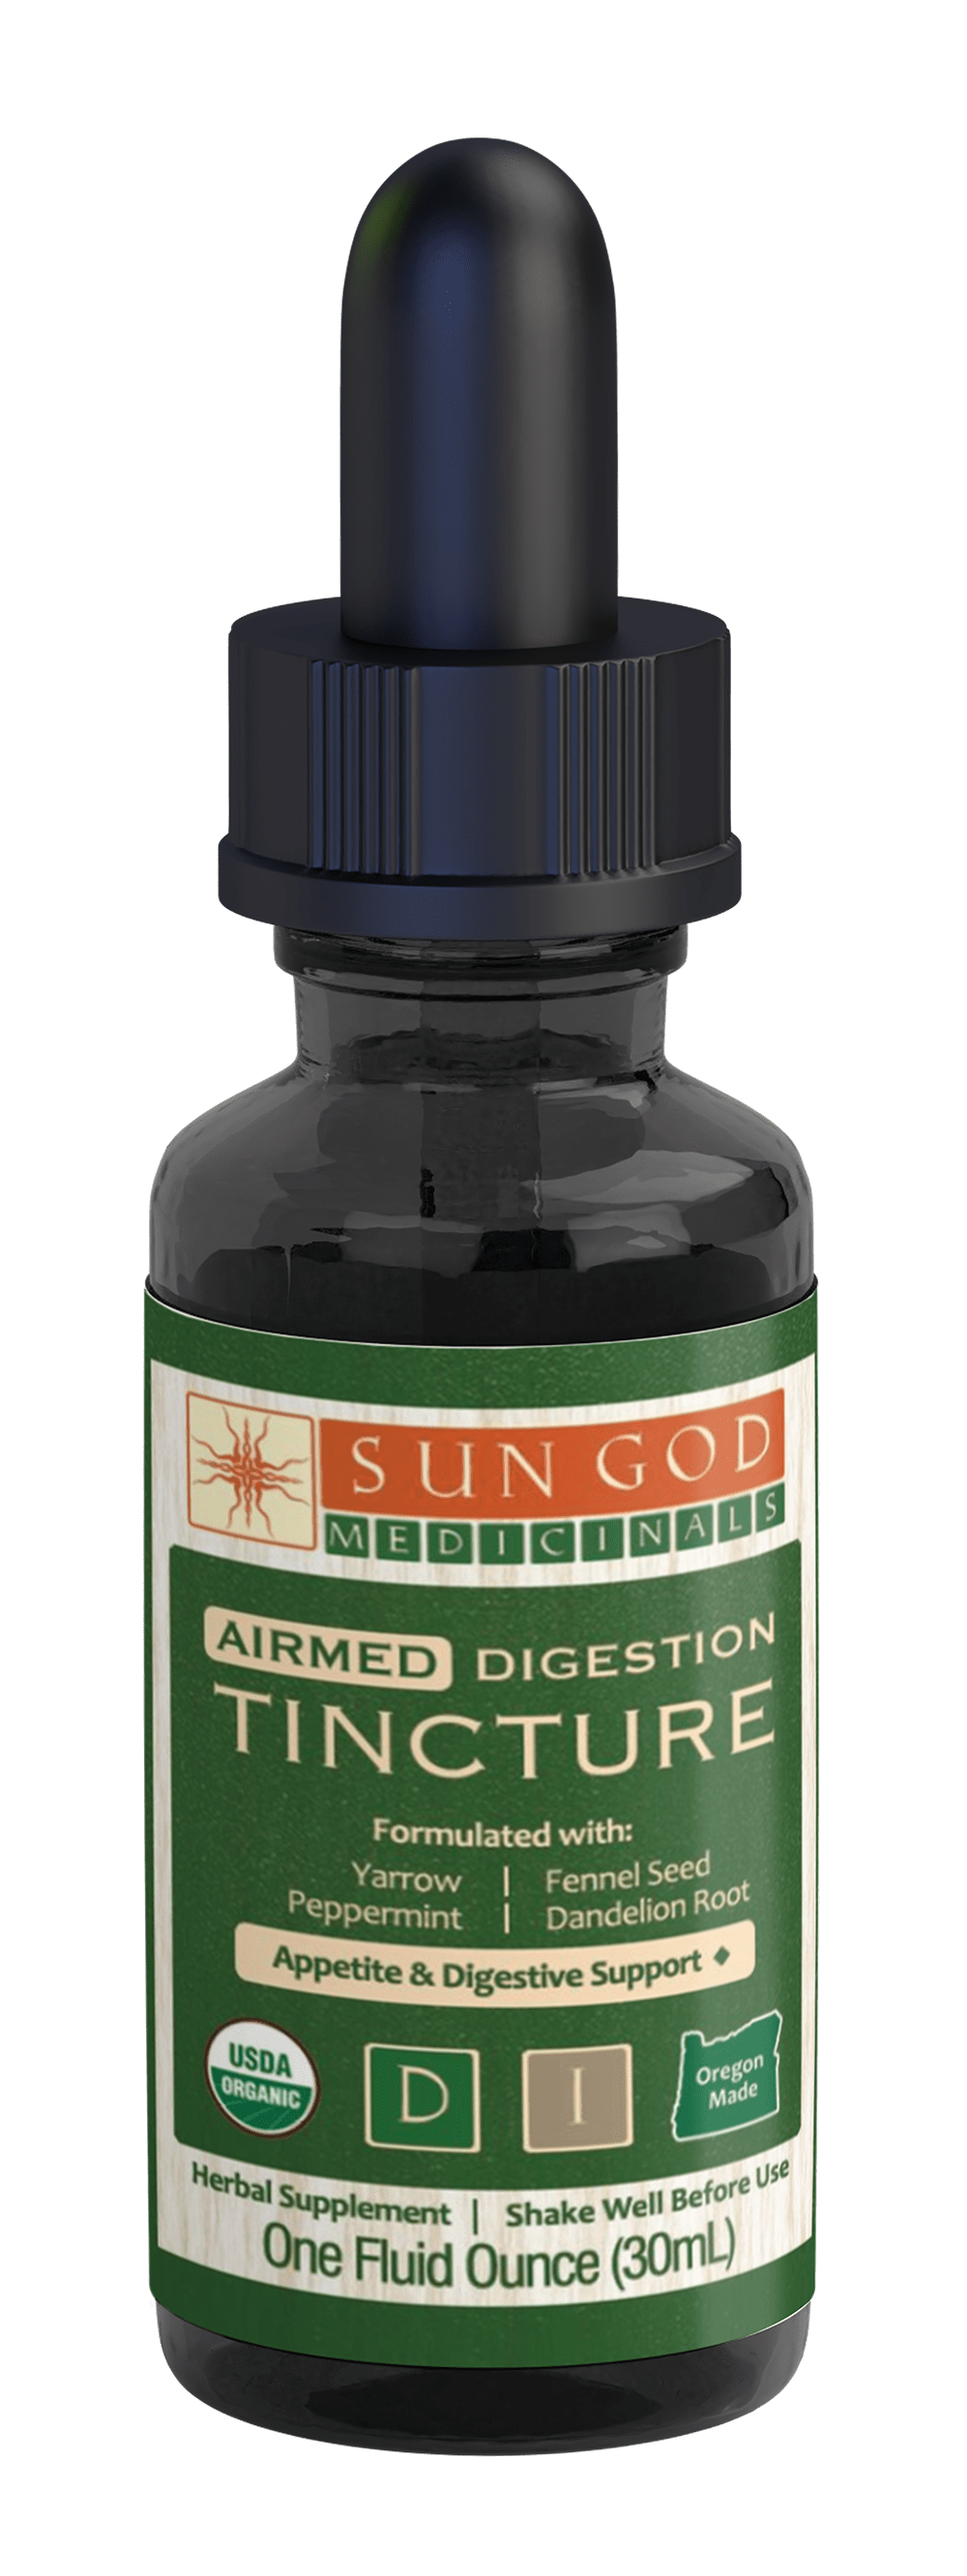 Digestion Support Gift Box - Sun God Medicinals